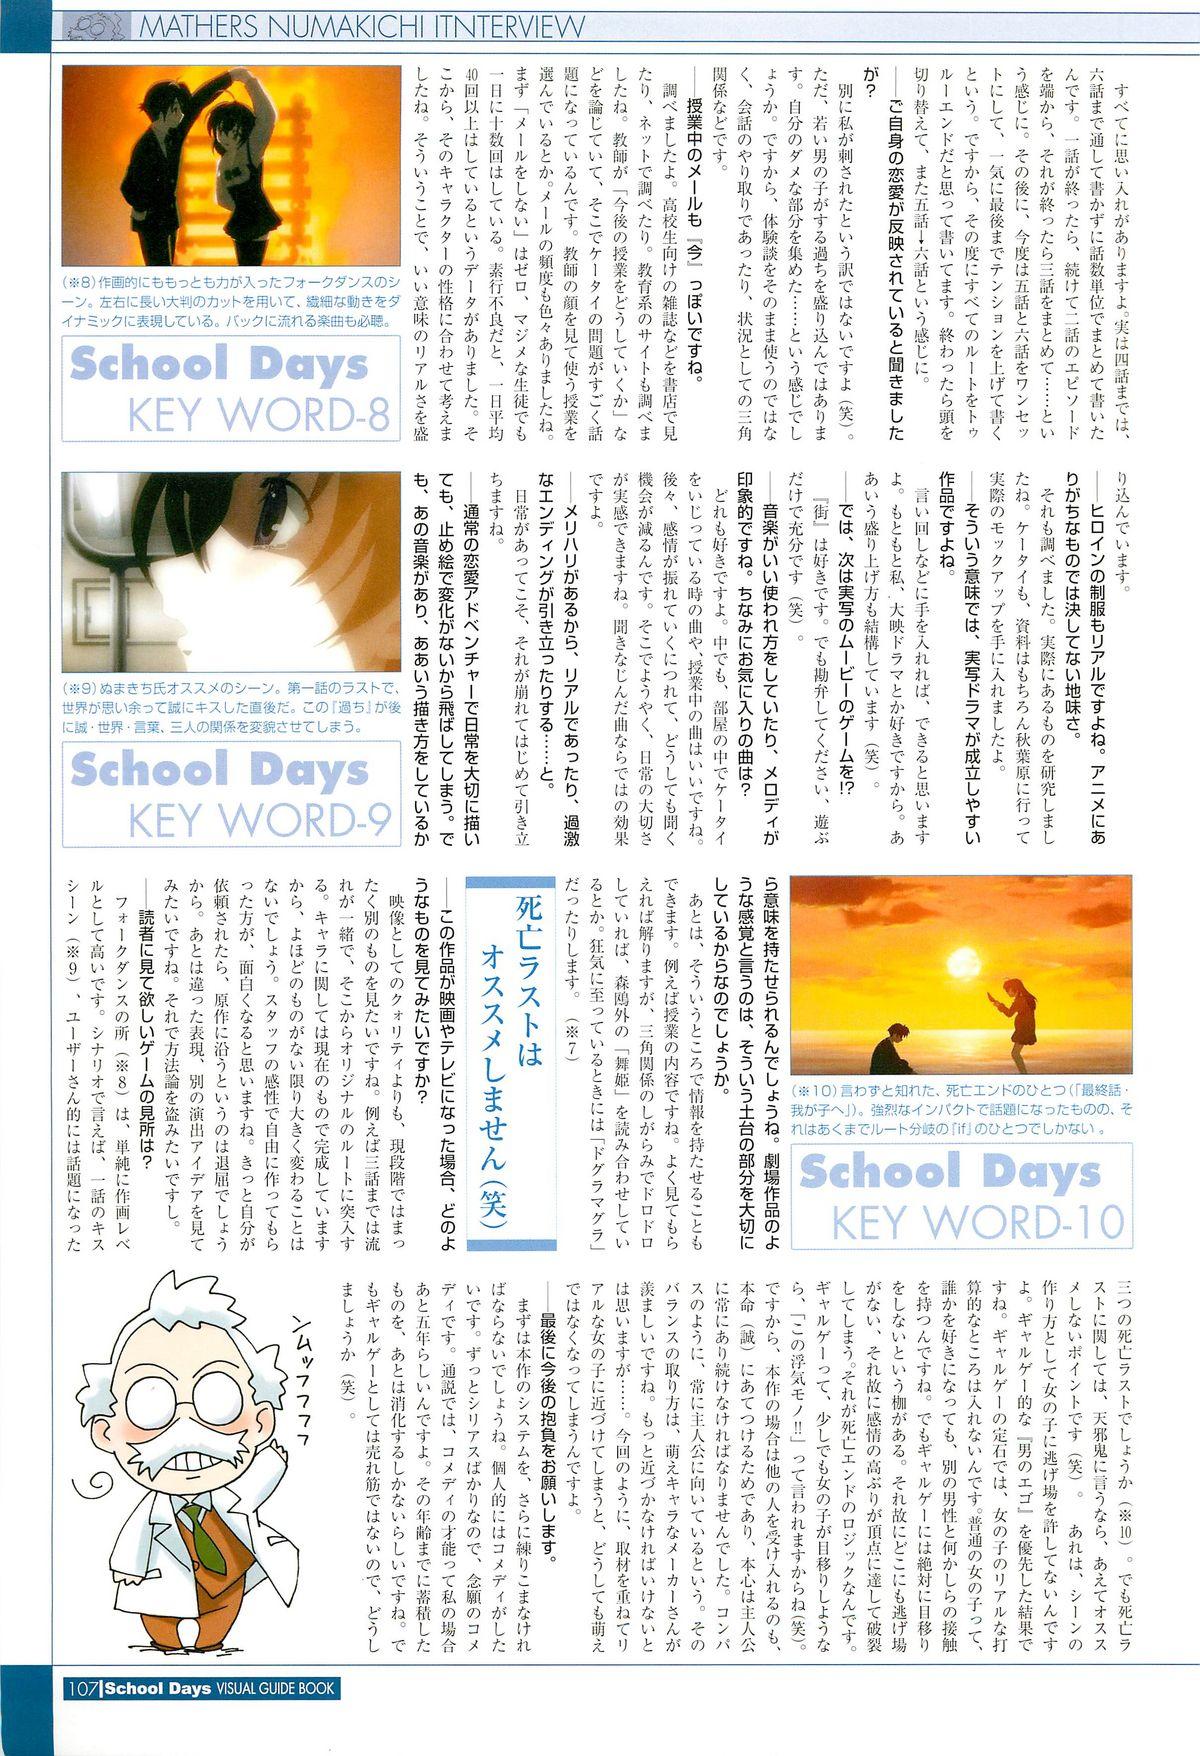 School Days Visual Guide Book 108